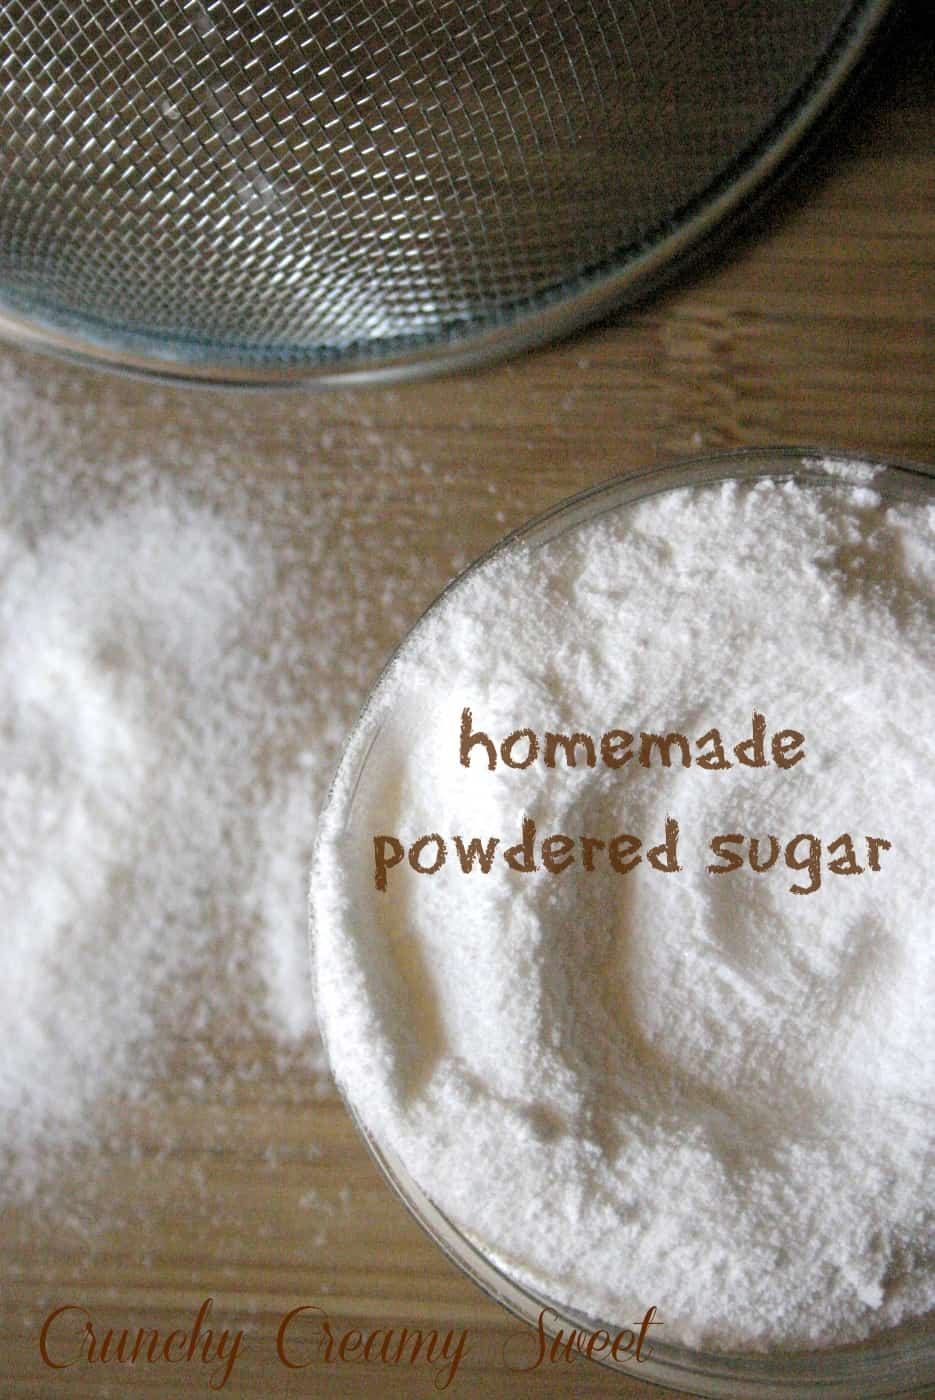 homemade powdered sugar Kitchen Know How: Homemade Powdered Sugar